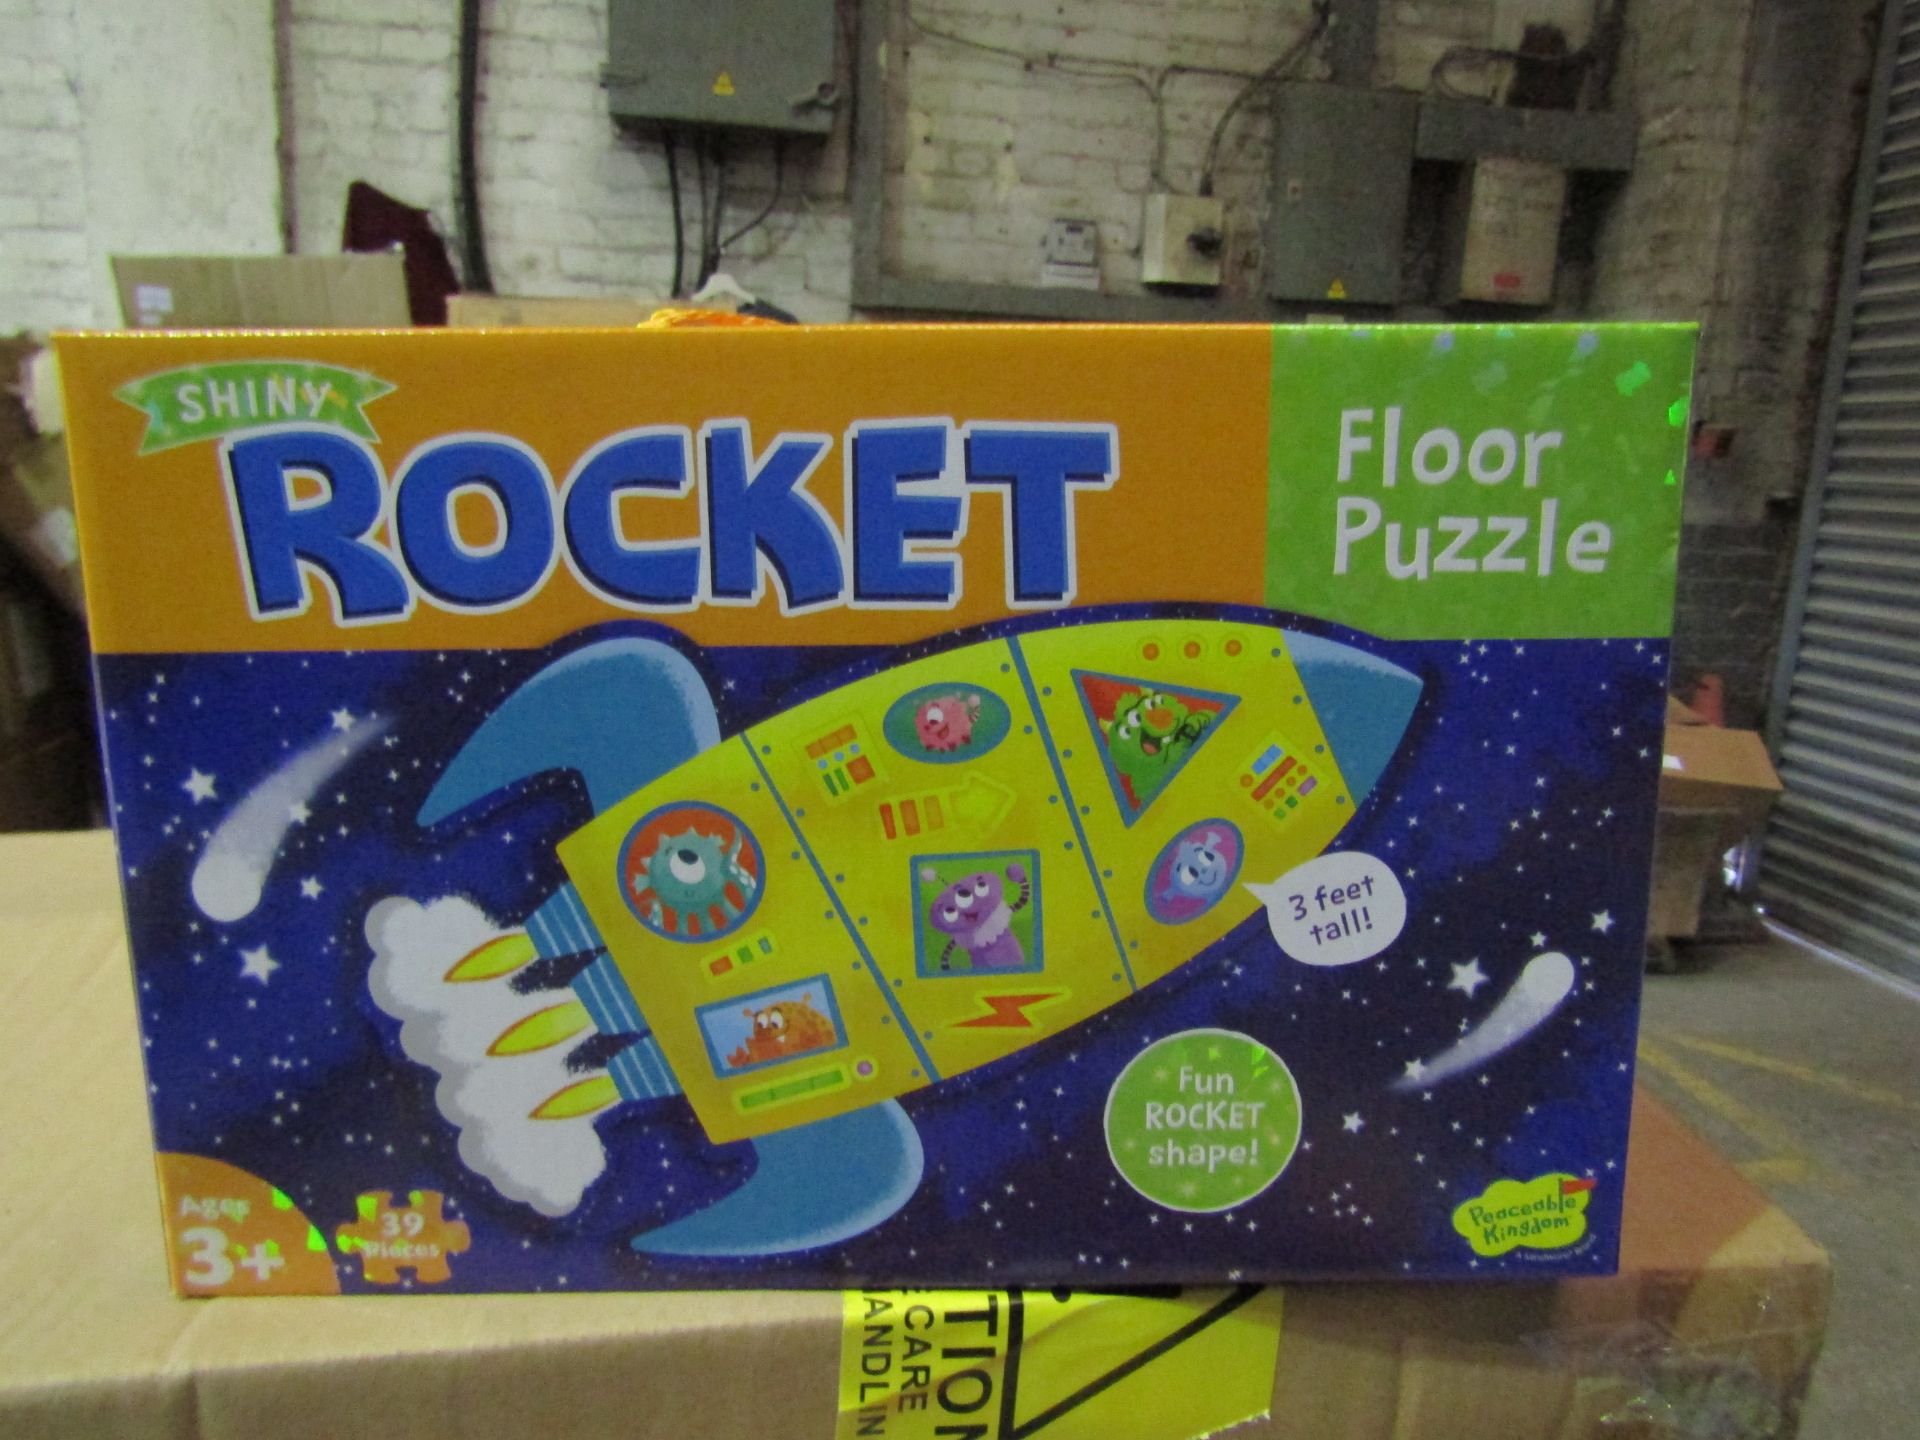 Shiny Rocket Floor Puzzle 3FT Tall New & Boxed